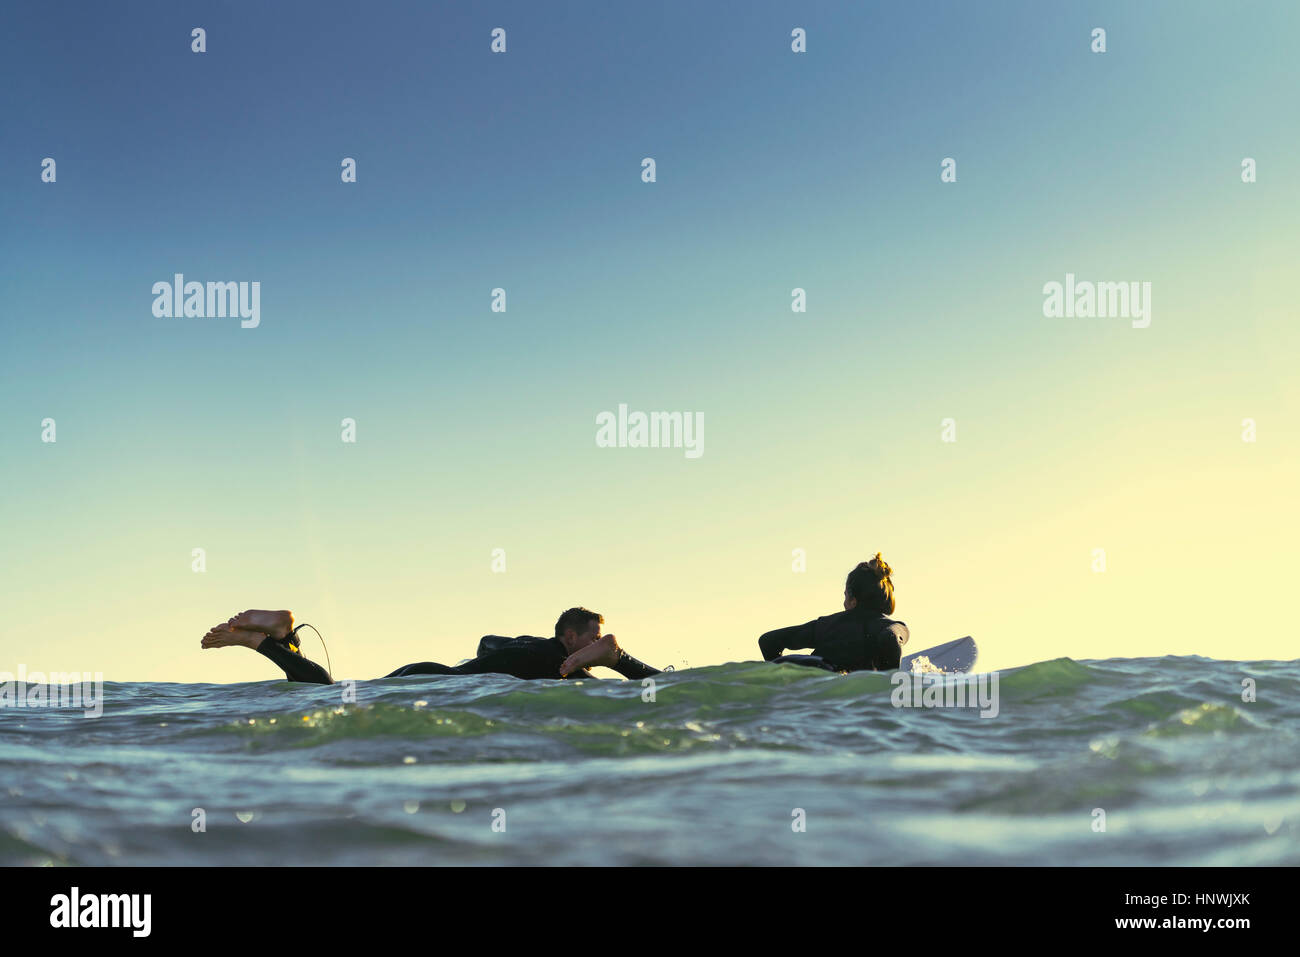 Surfing couple paddling surfboards at sea, Newport Beach, California, USA Stock Photo